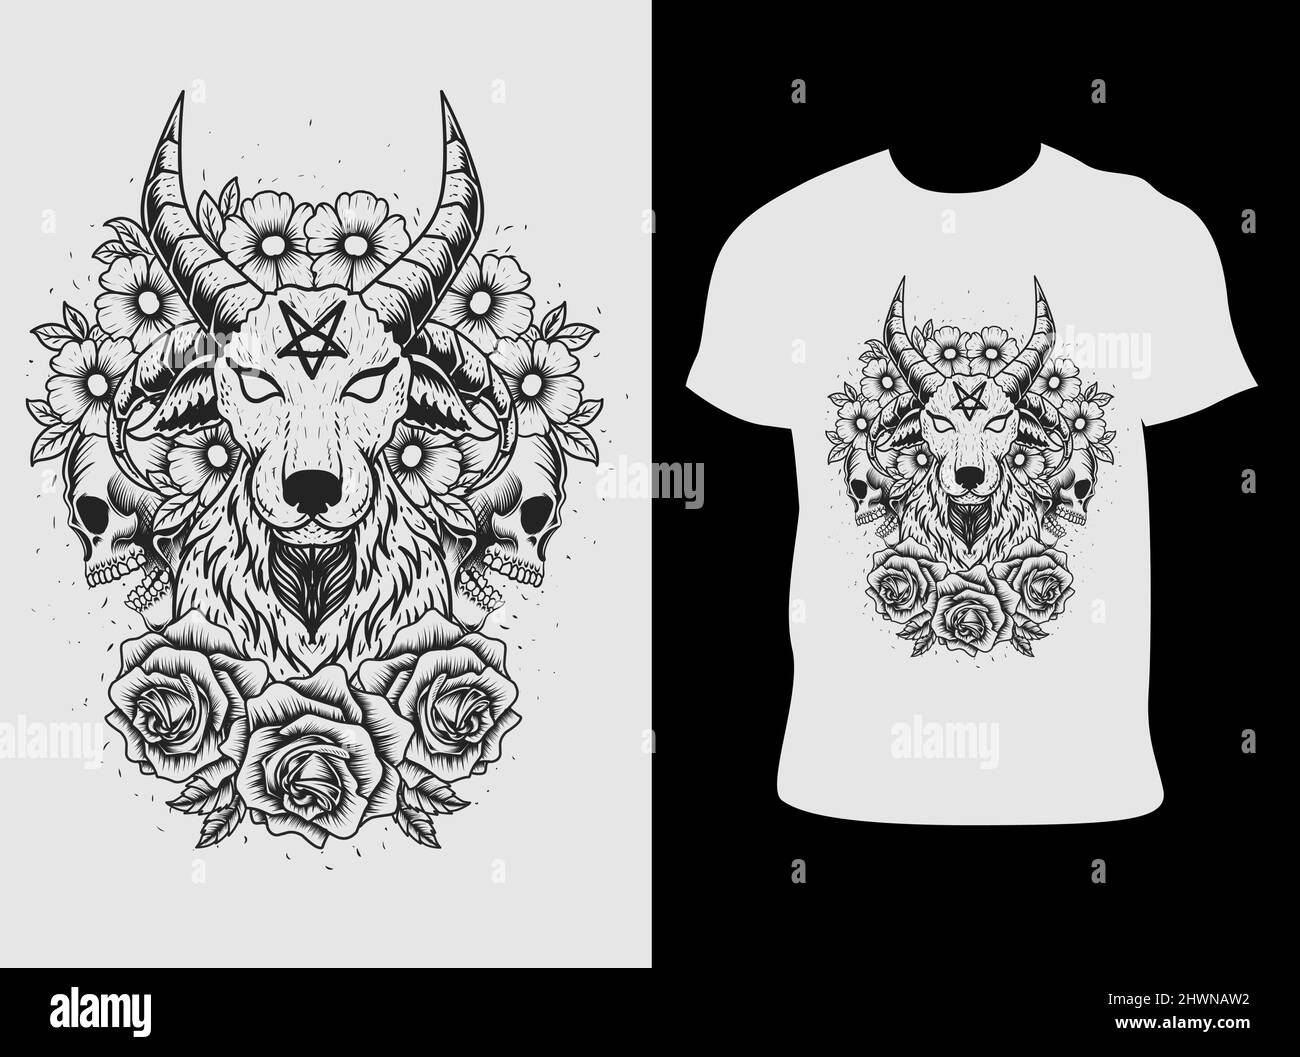 Ram Skull Tattoo Sketch T-shirt Printing Stock Vector (Royalty Free)  2173681219 | Shutterstock